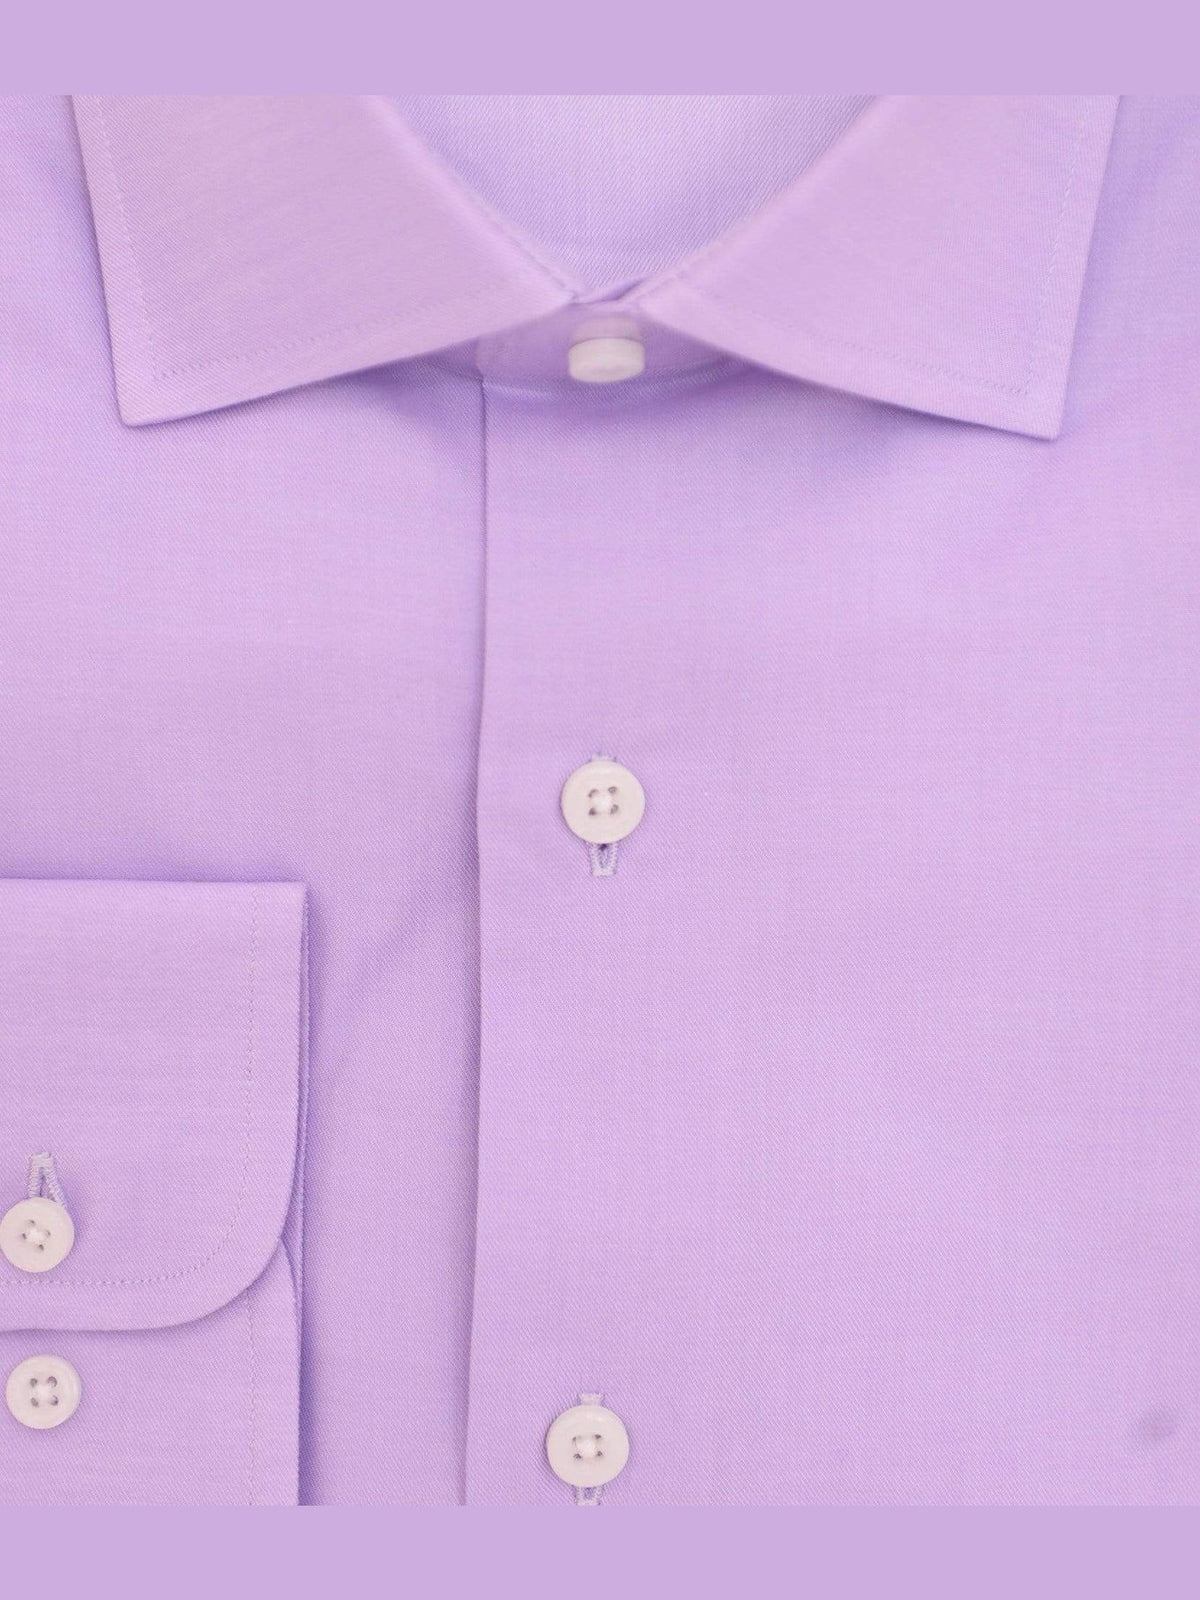 Christopher Lena SHIRTS Mens Slim Fit Solid Lavender Purple Spread Collar Cotton Dress Shirt